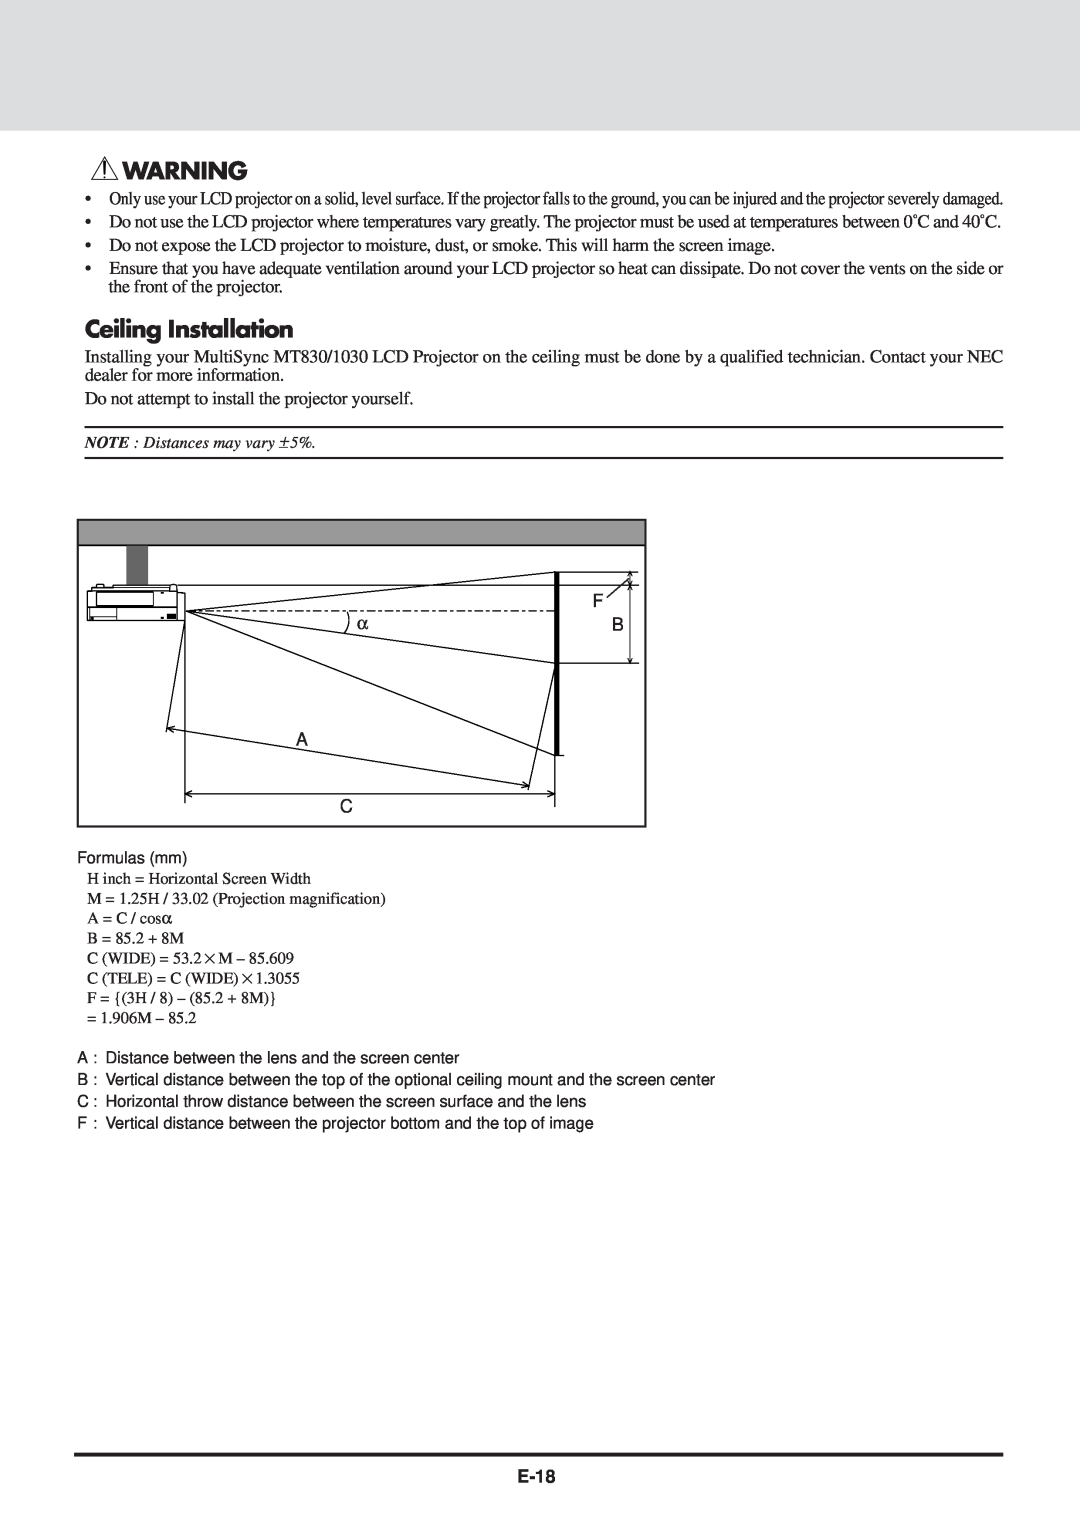 NEC MT830 user manual Ceiling Installation, E-18 